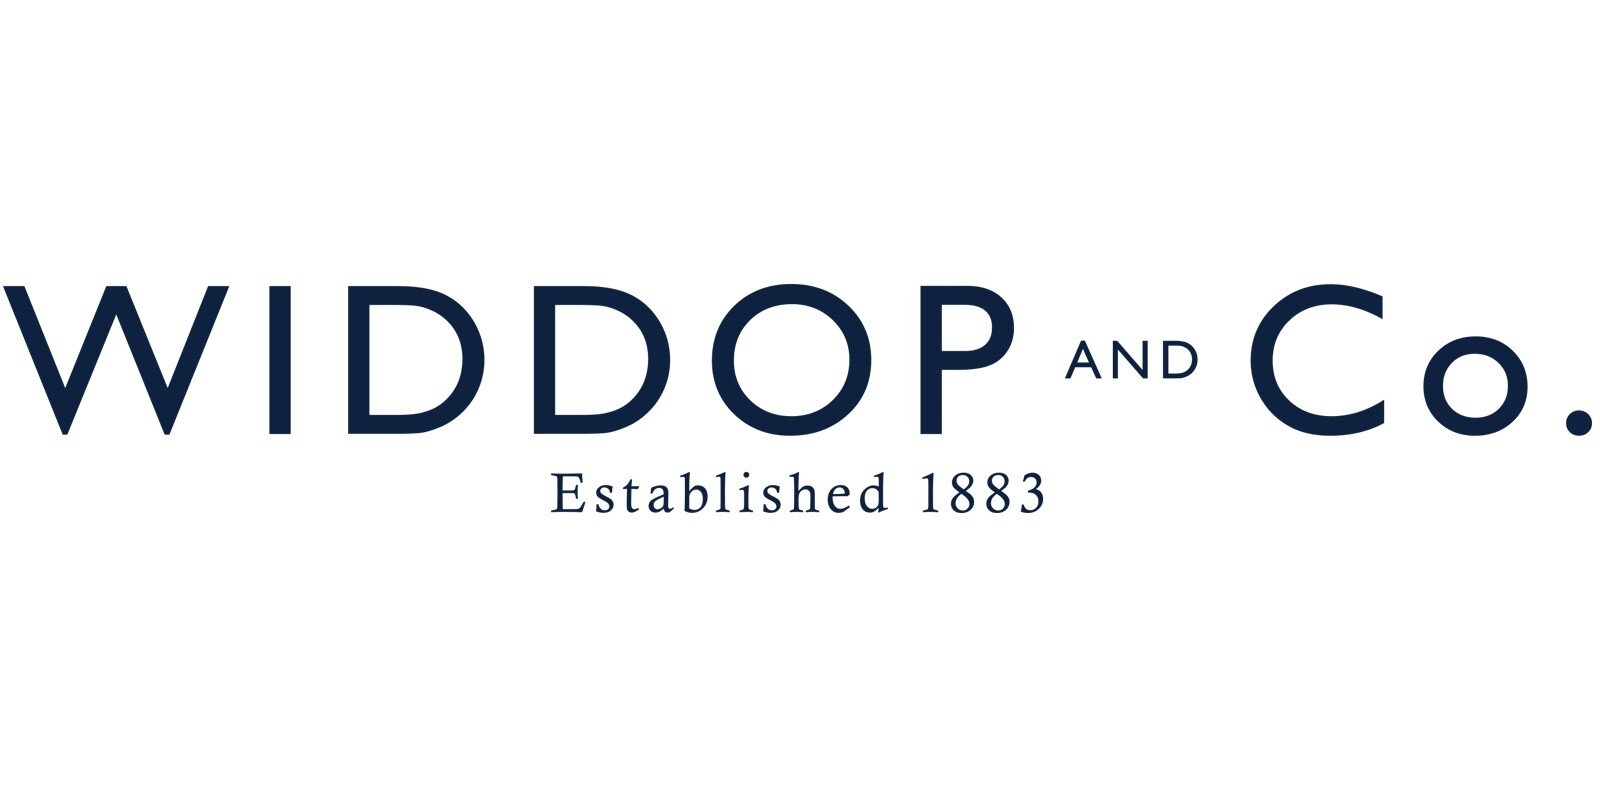 widdop and co logo .jpeg